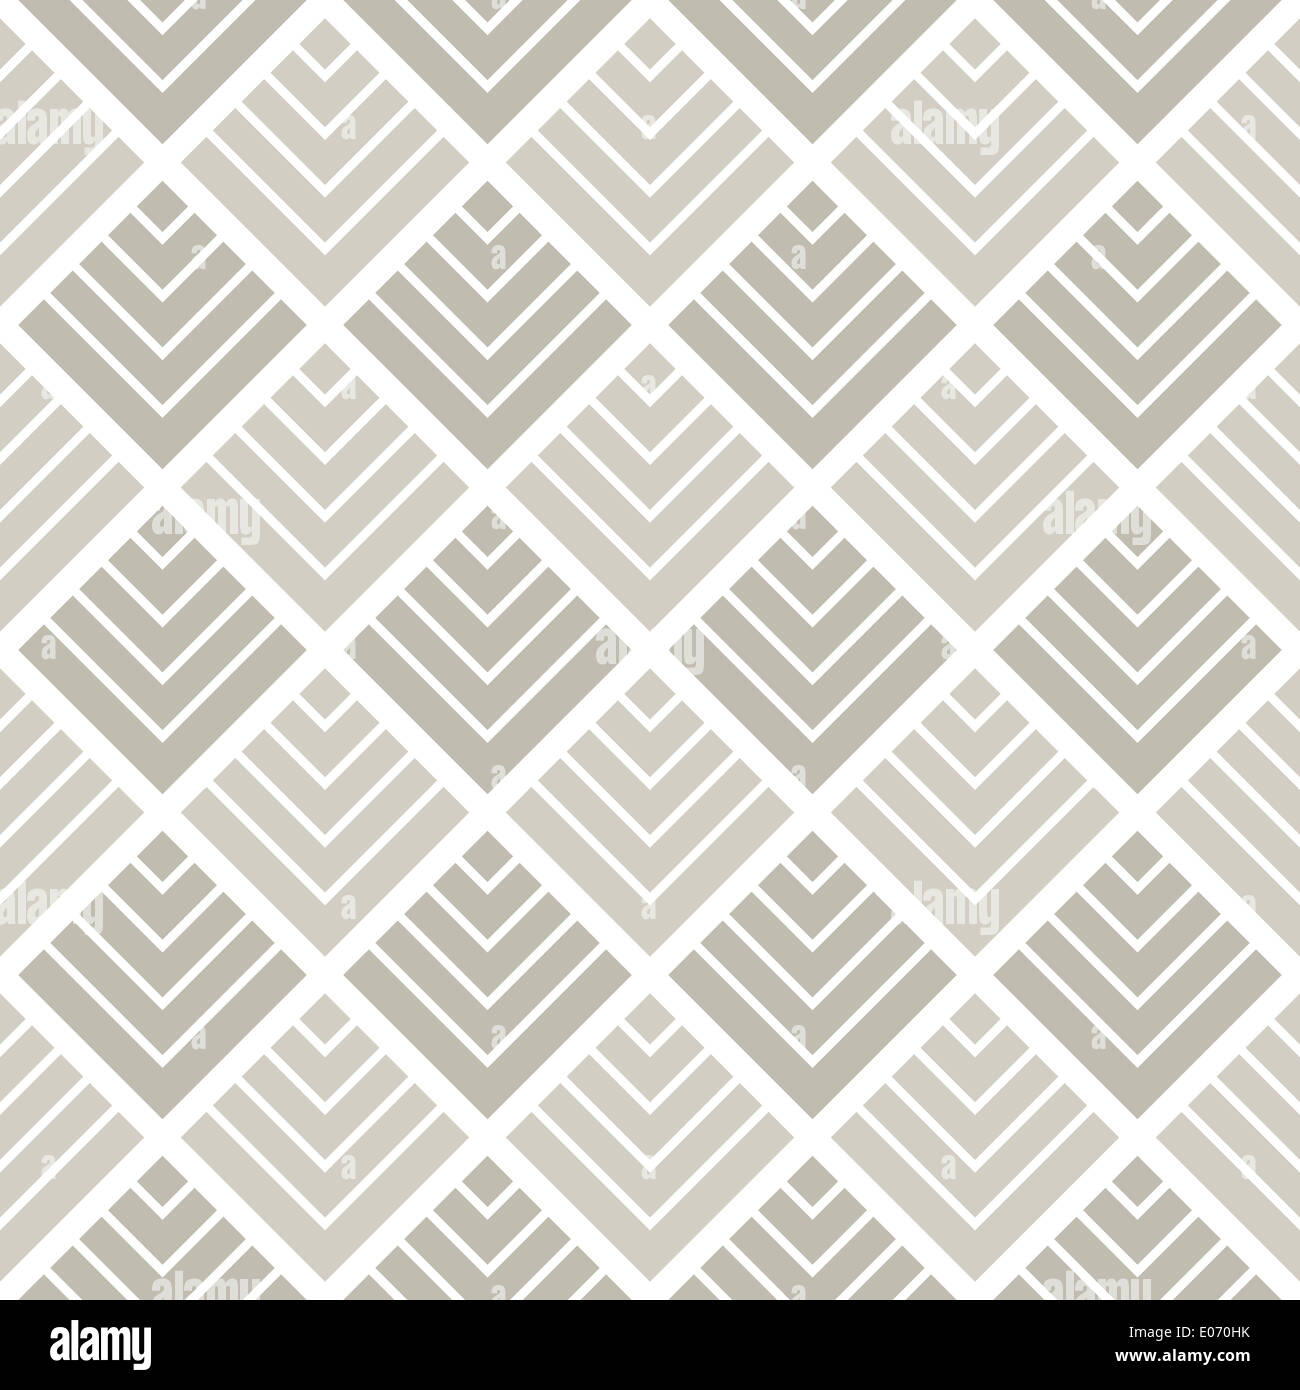 Abstract seamless pattern. Stock Photo